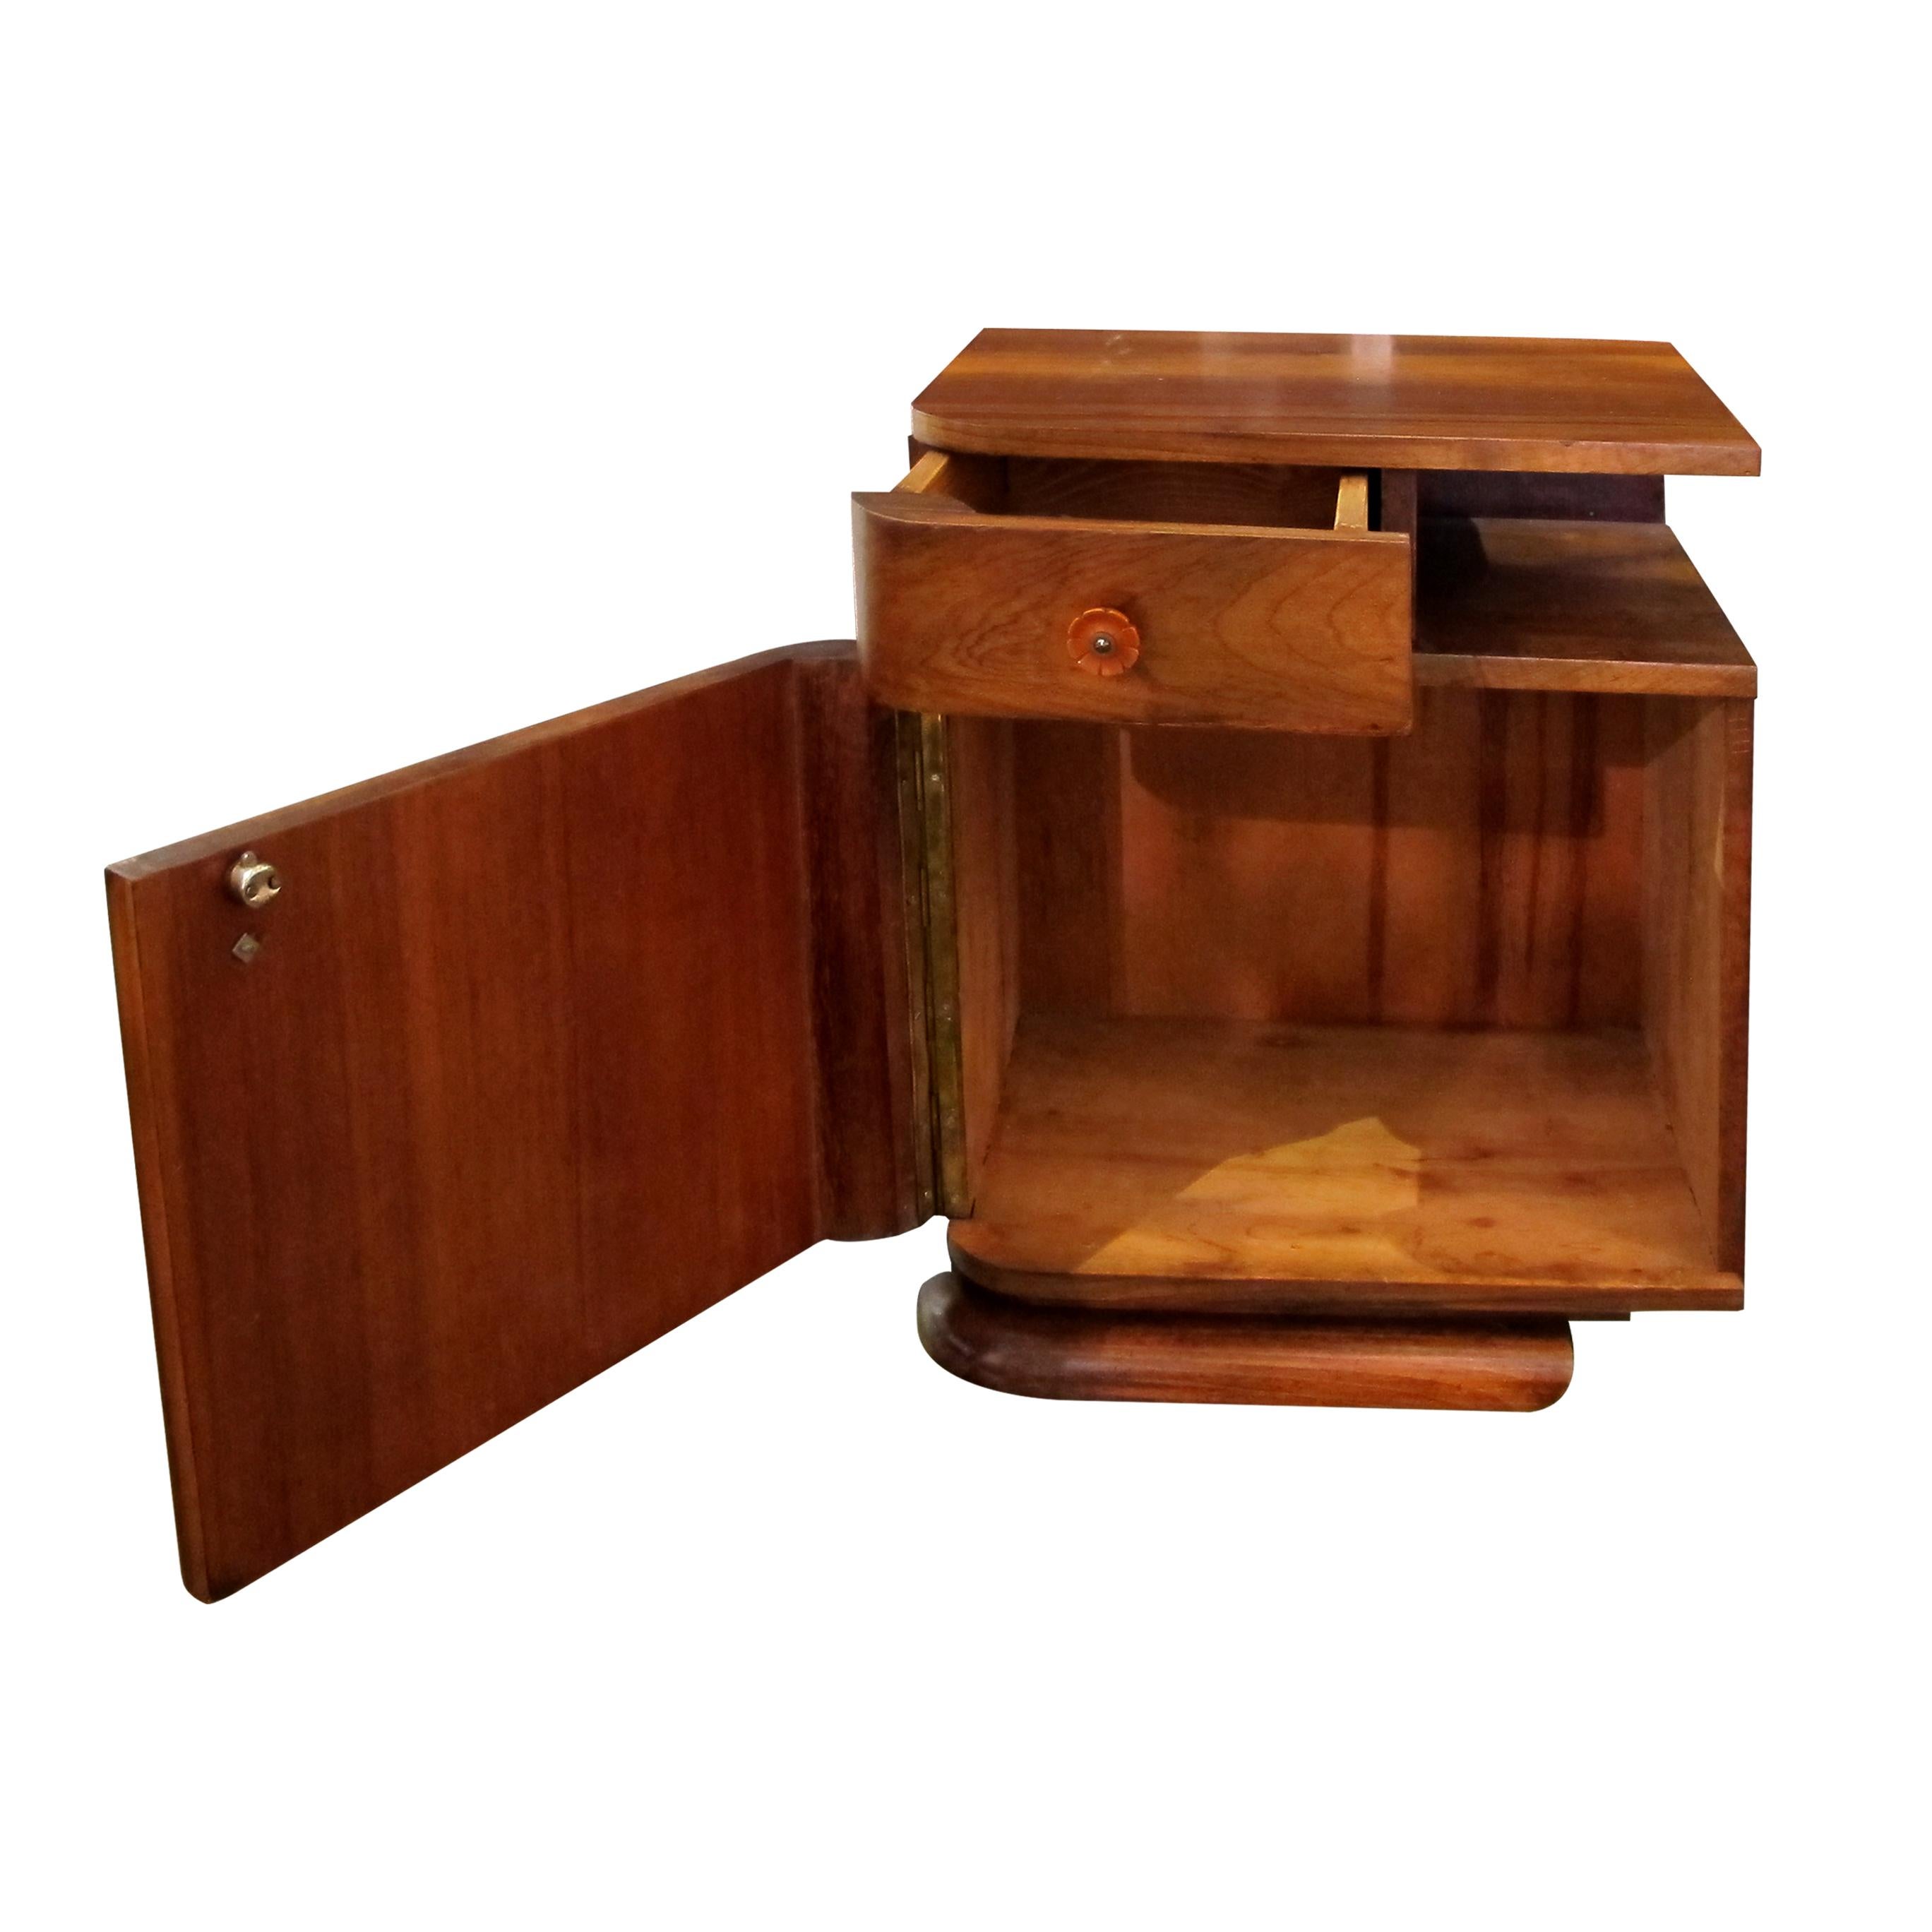 Other Pair of French 1930s Art Deco Walnut Bedside Tables-Nightstands Bakelite Handles